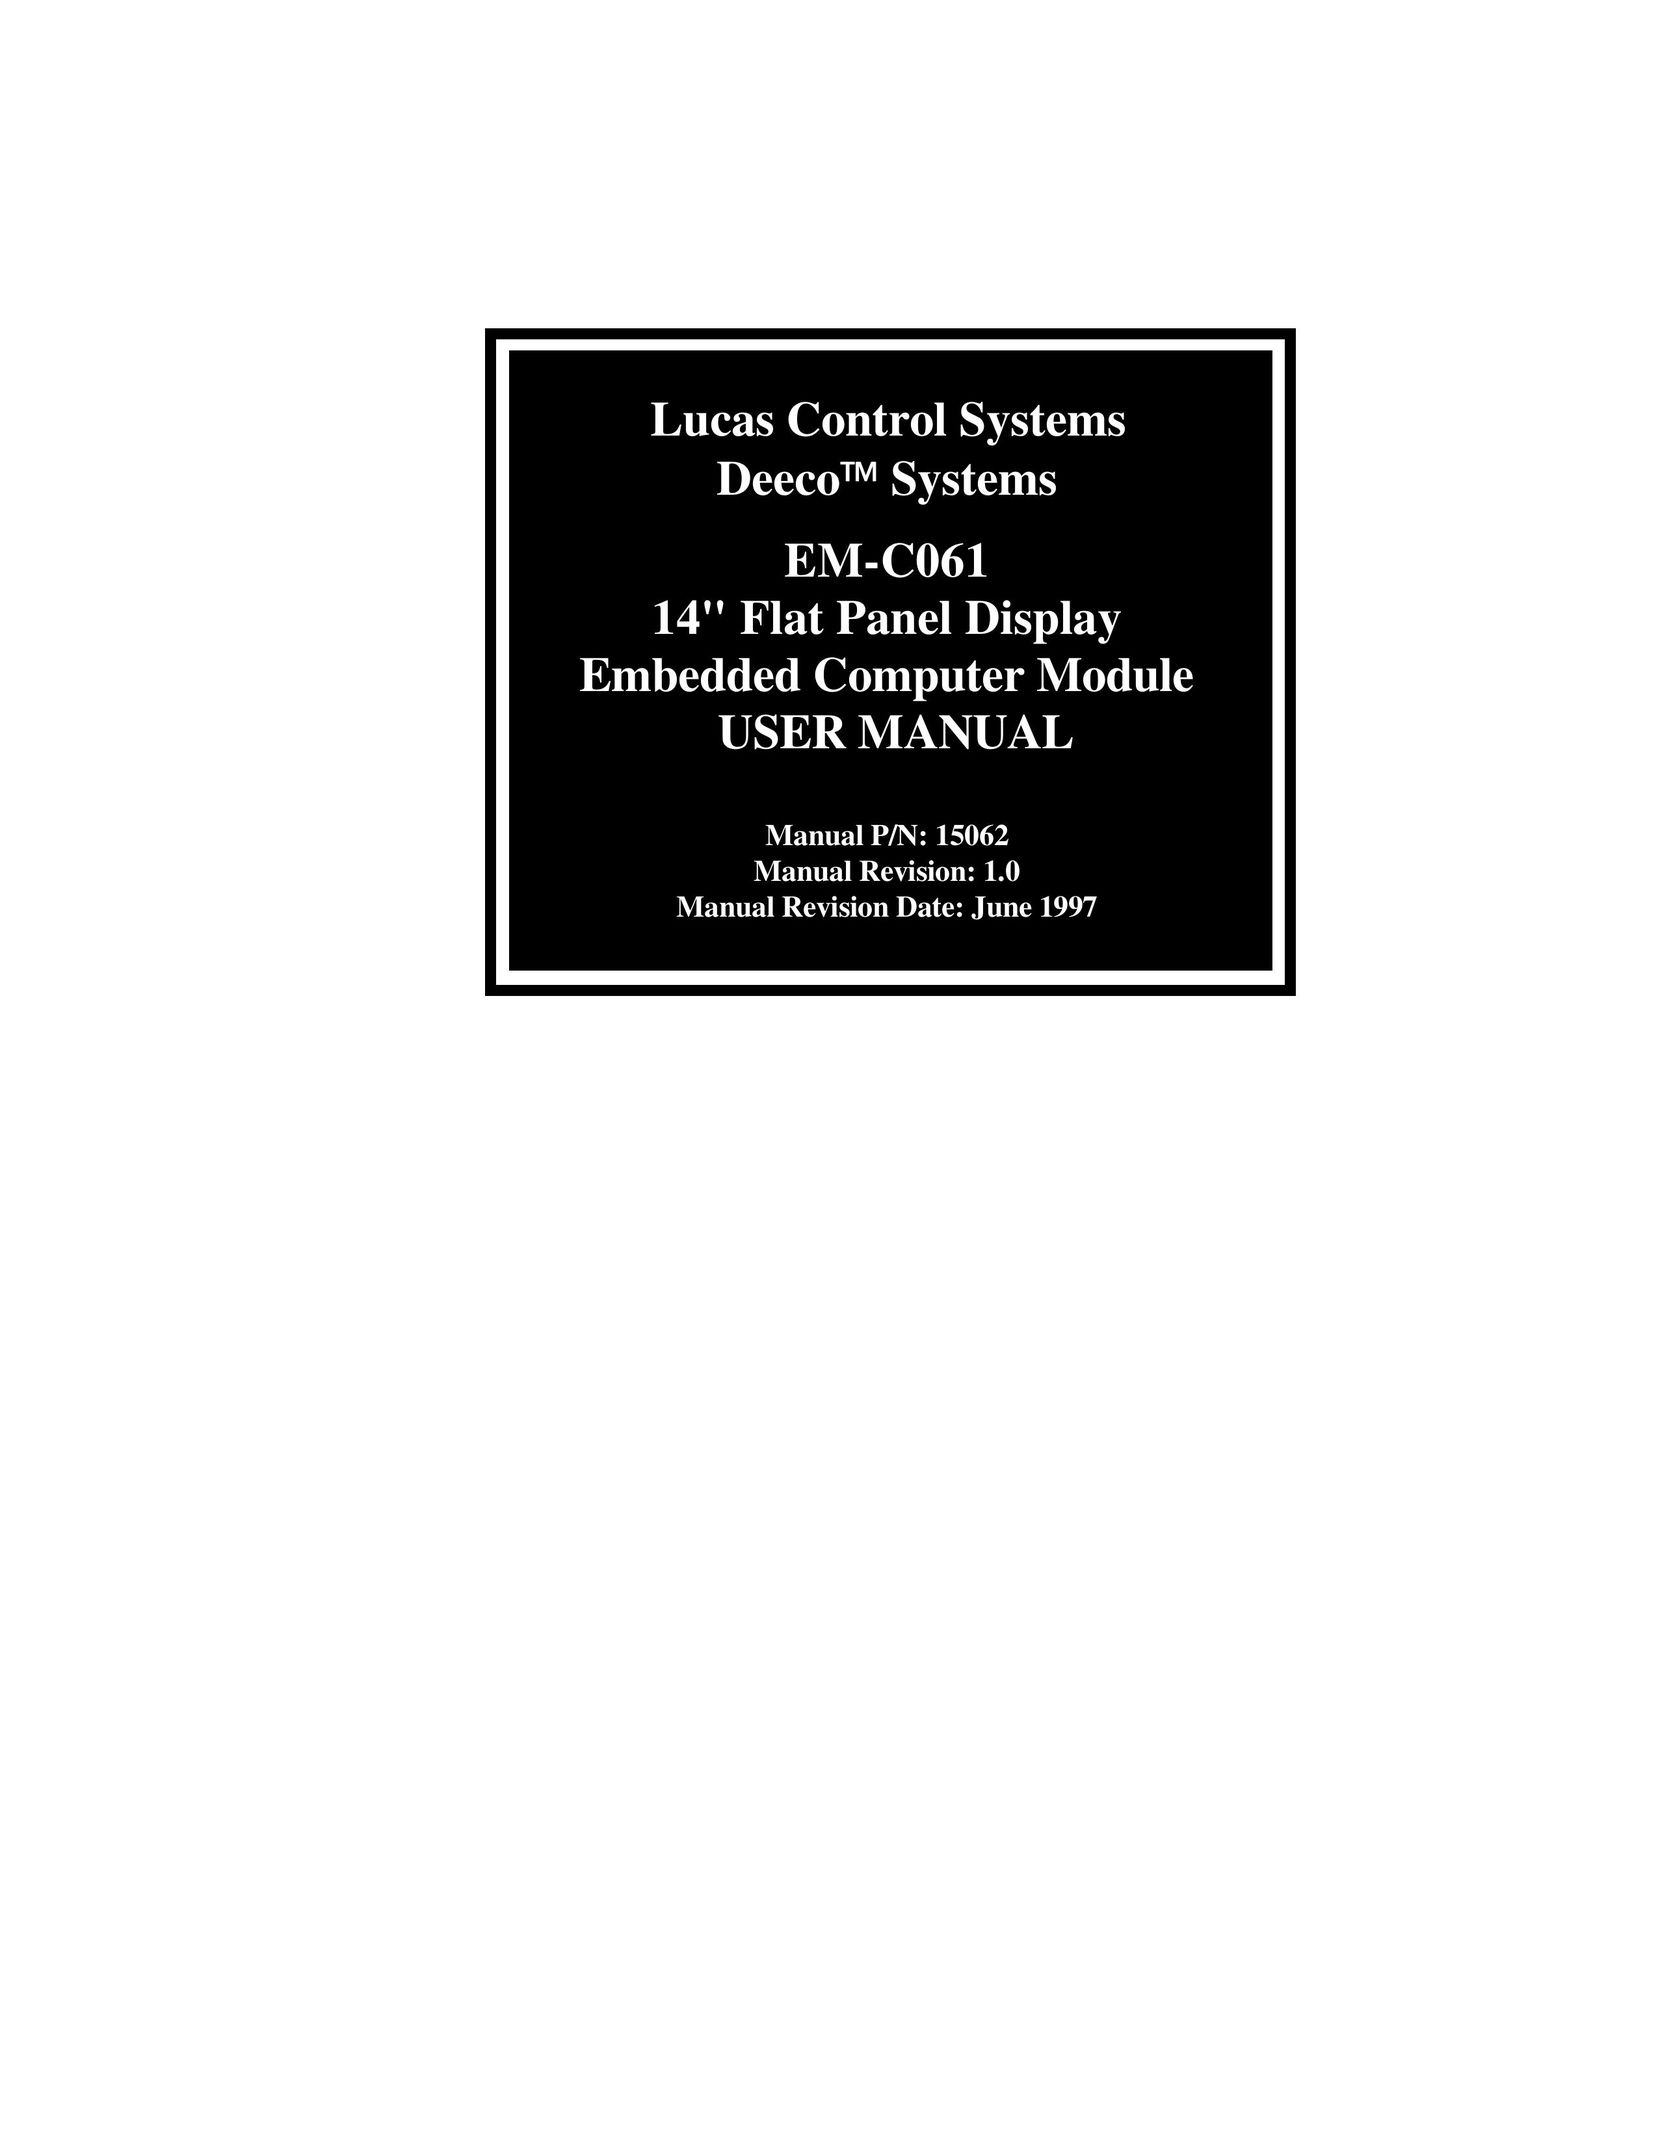 Lucas Industries EM-C061 Flat Panel Television User Manual